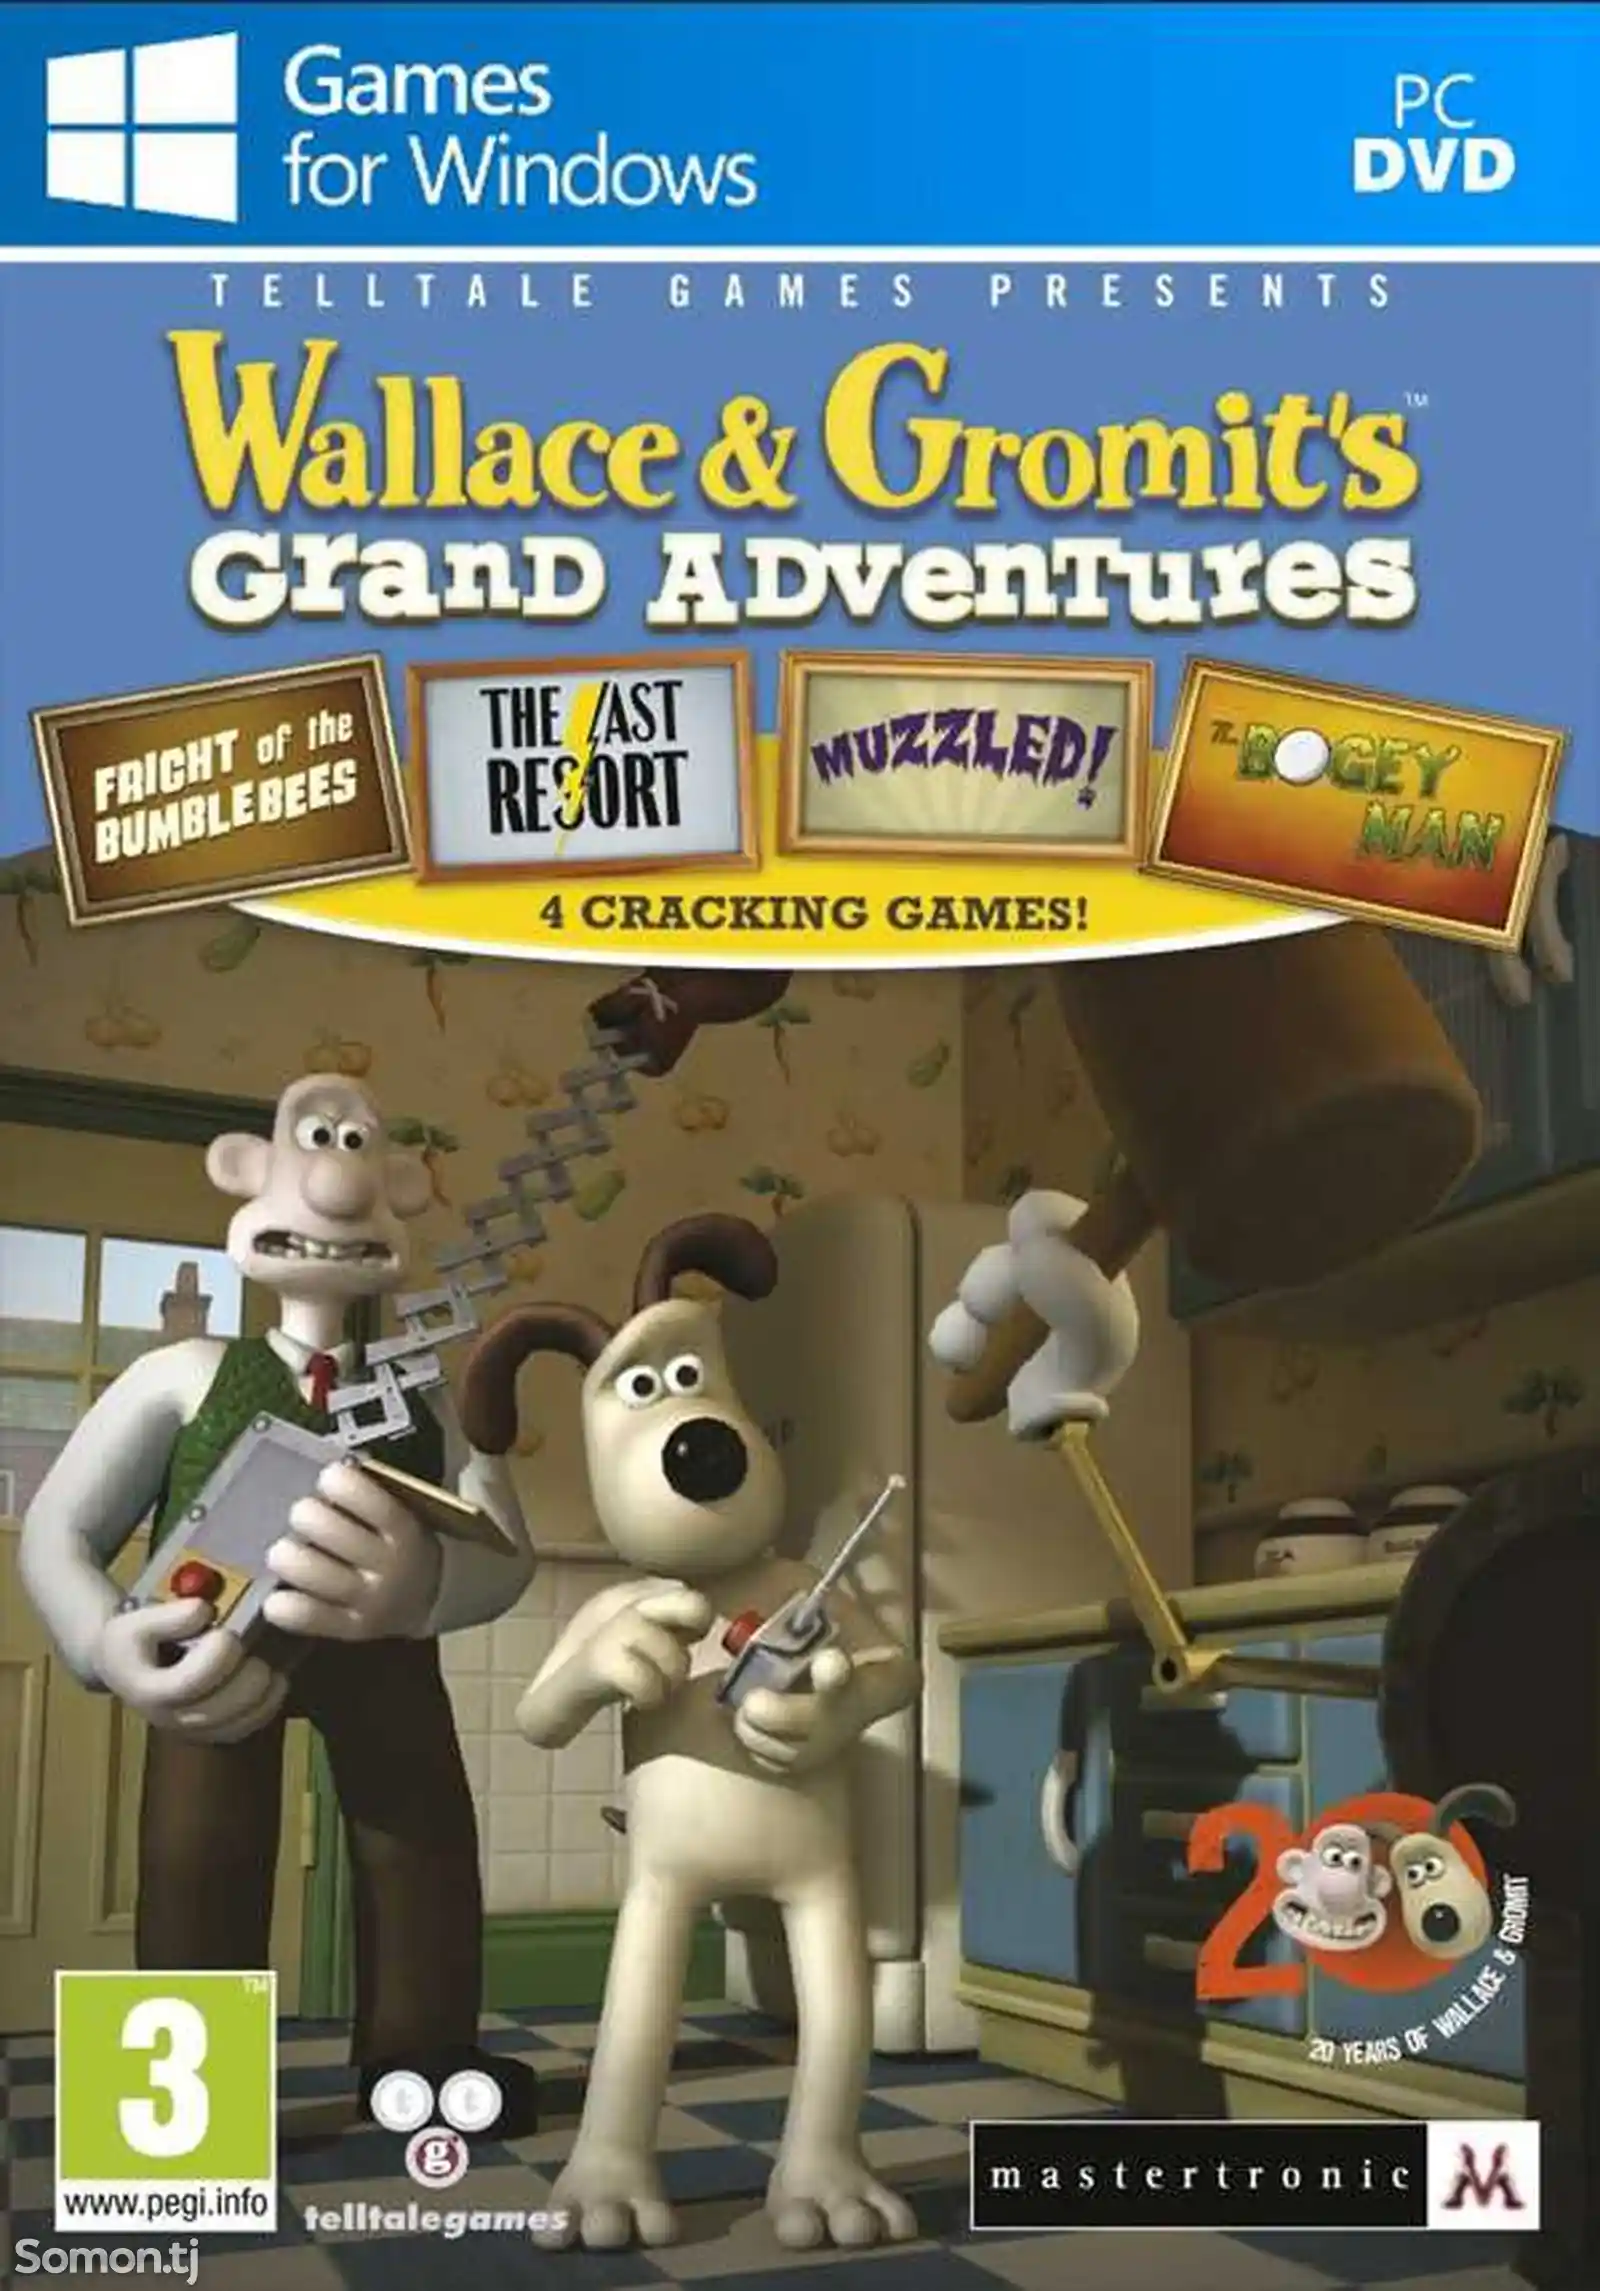 Игра Wallace gromis grand adventures для компьютера-пк-pc-1